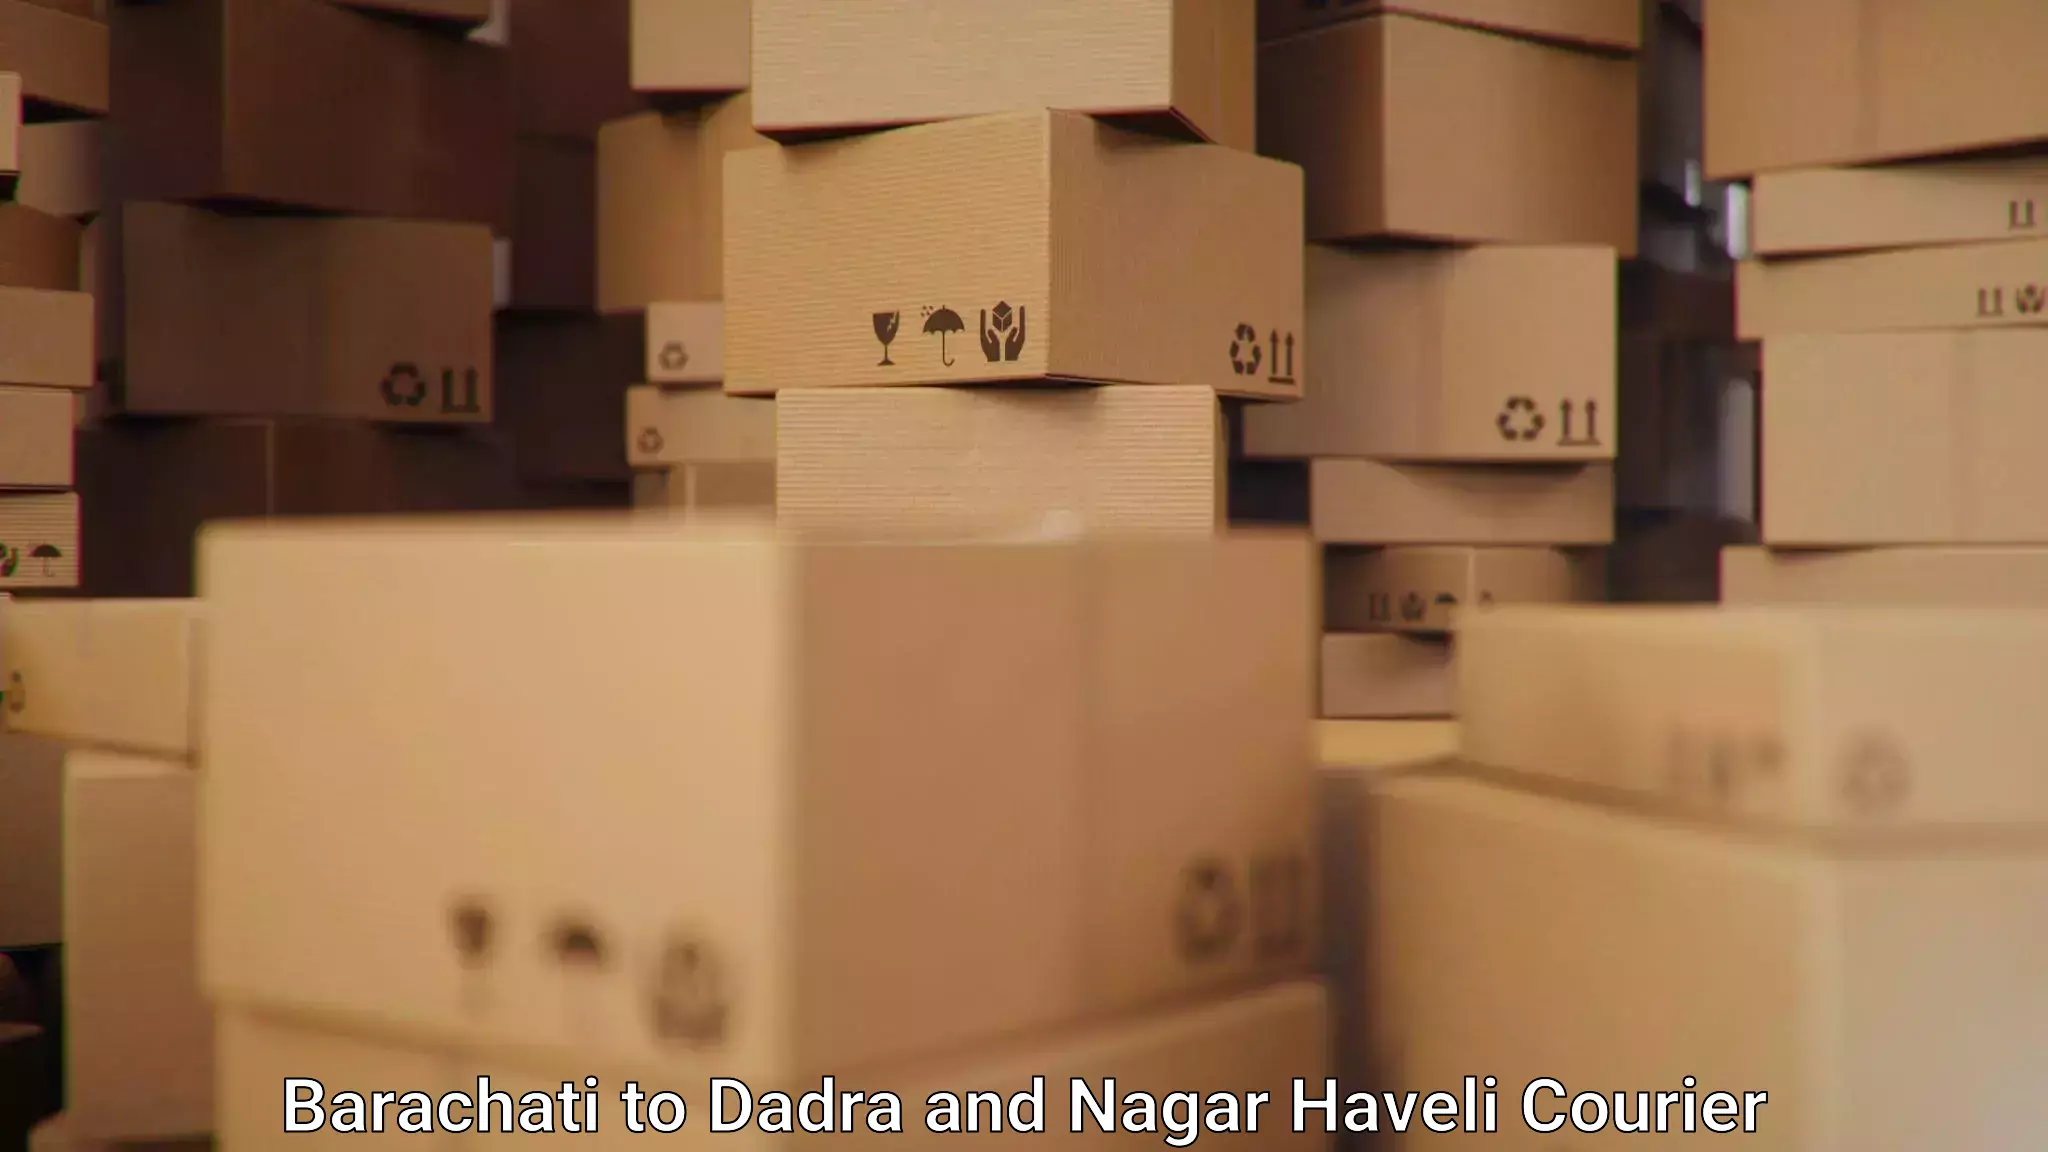 Global shipping solutions Barachati to Dadra and Nagar Haveli